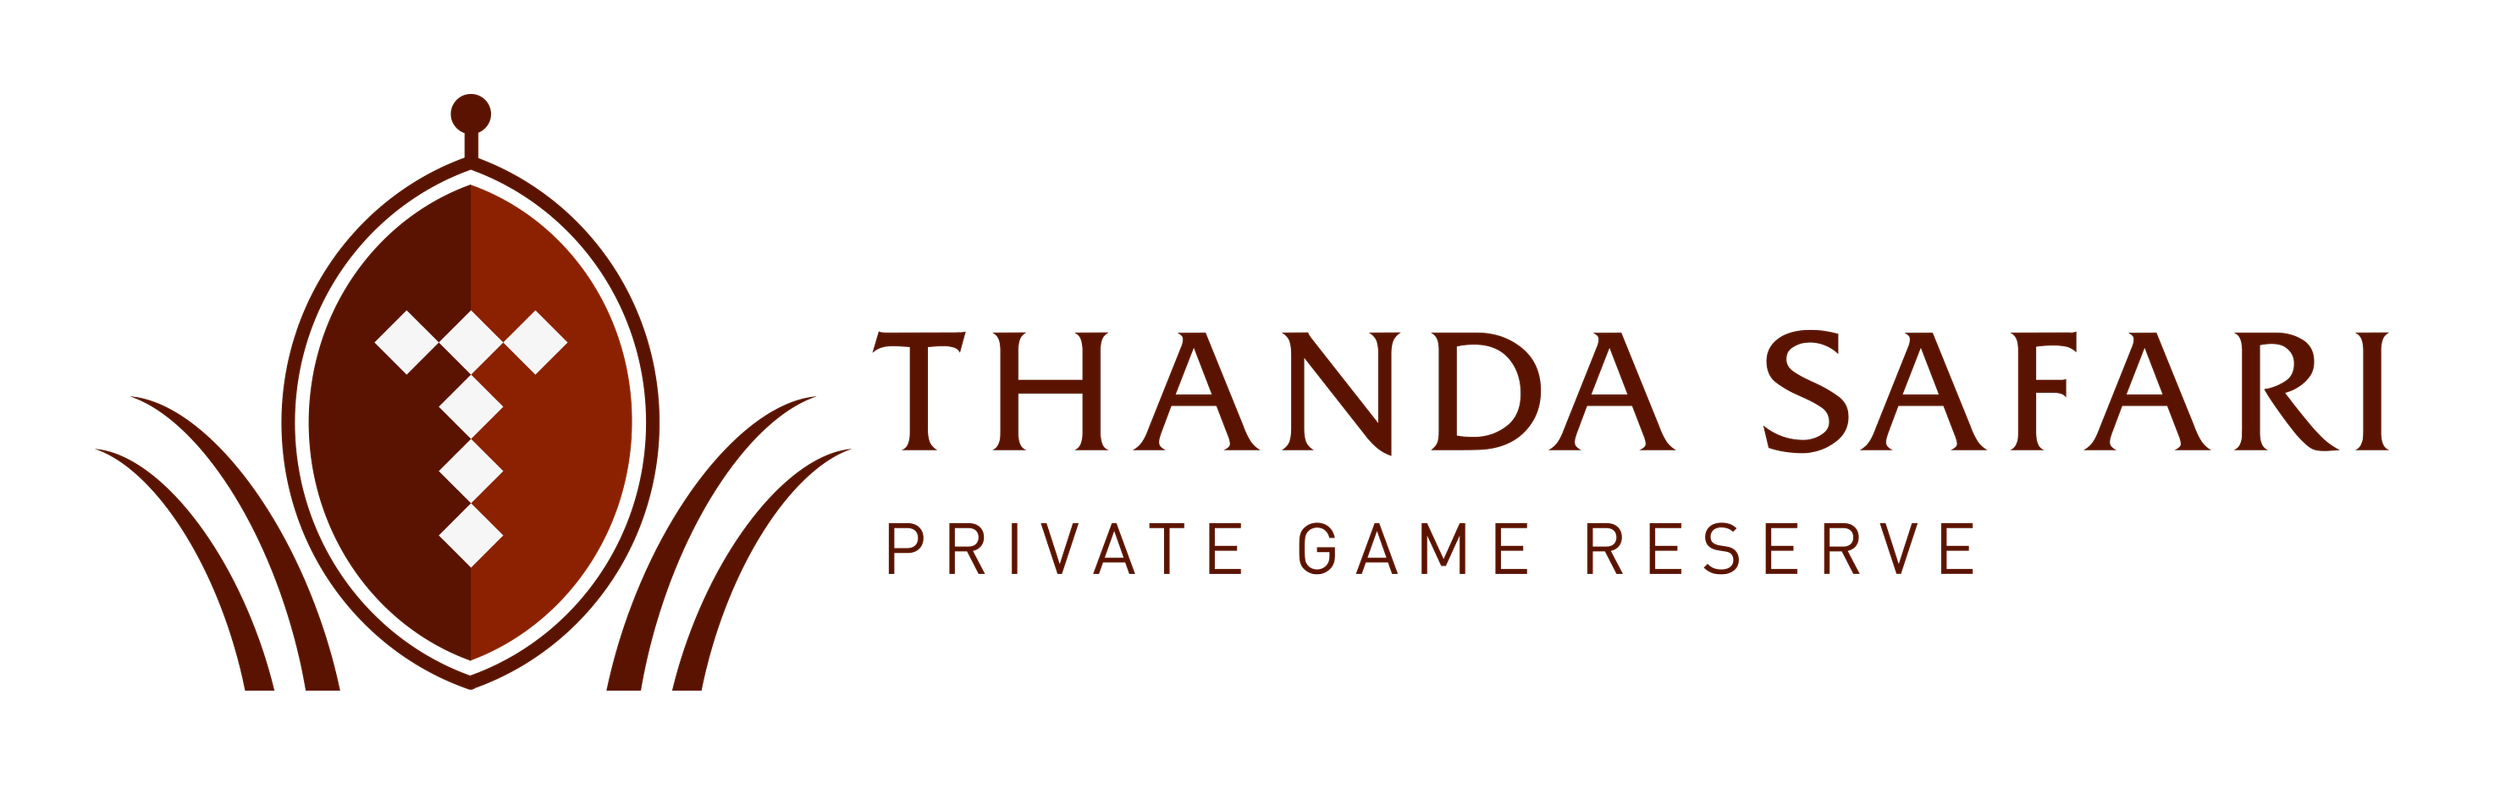 Thanda Safari Logo_Long.png